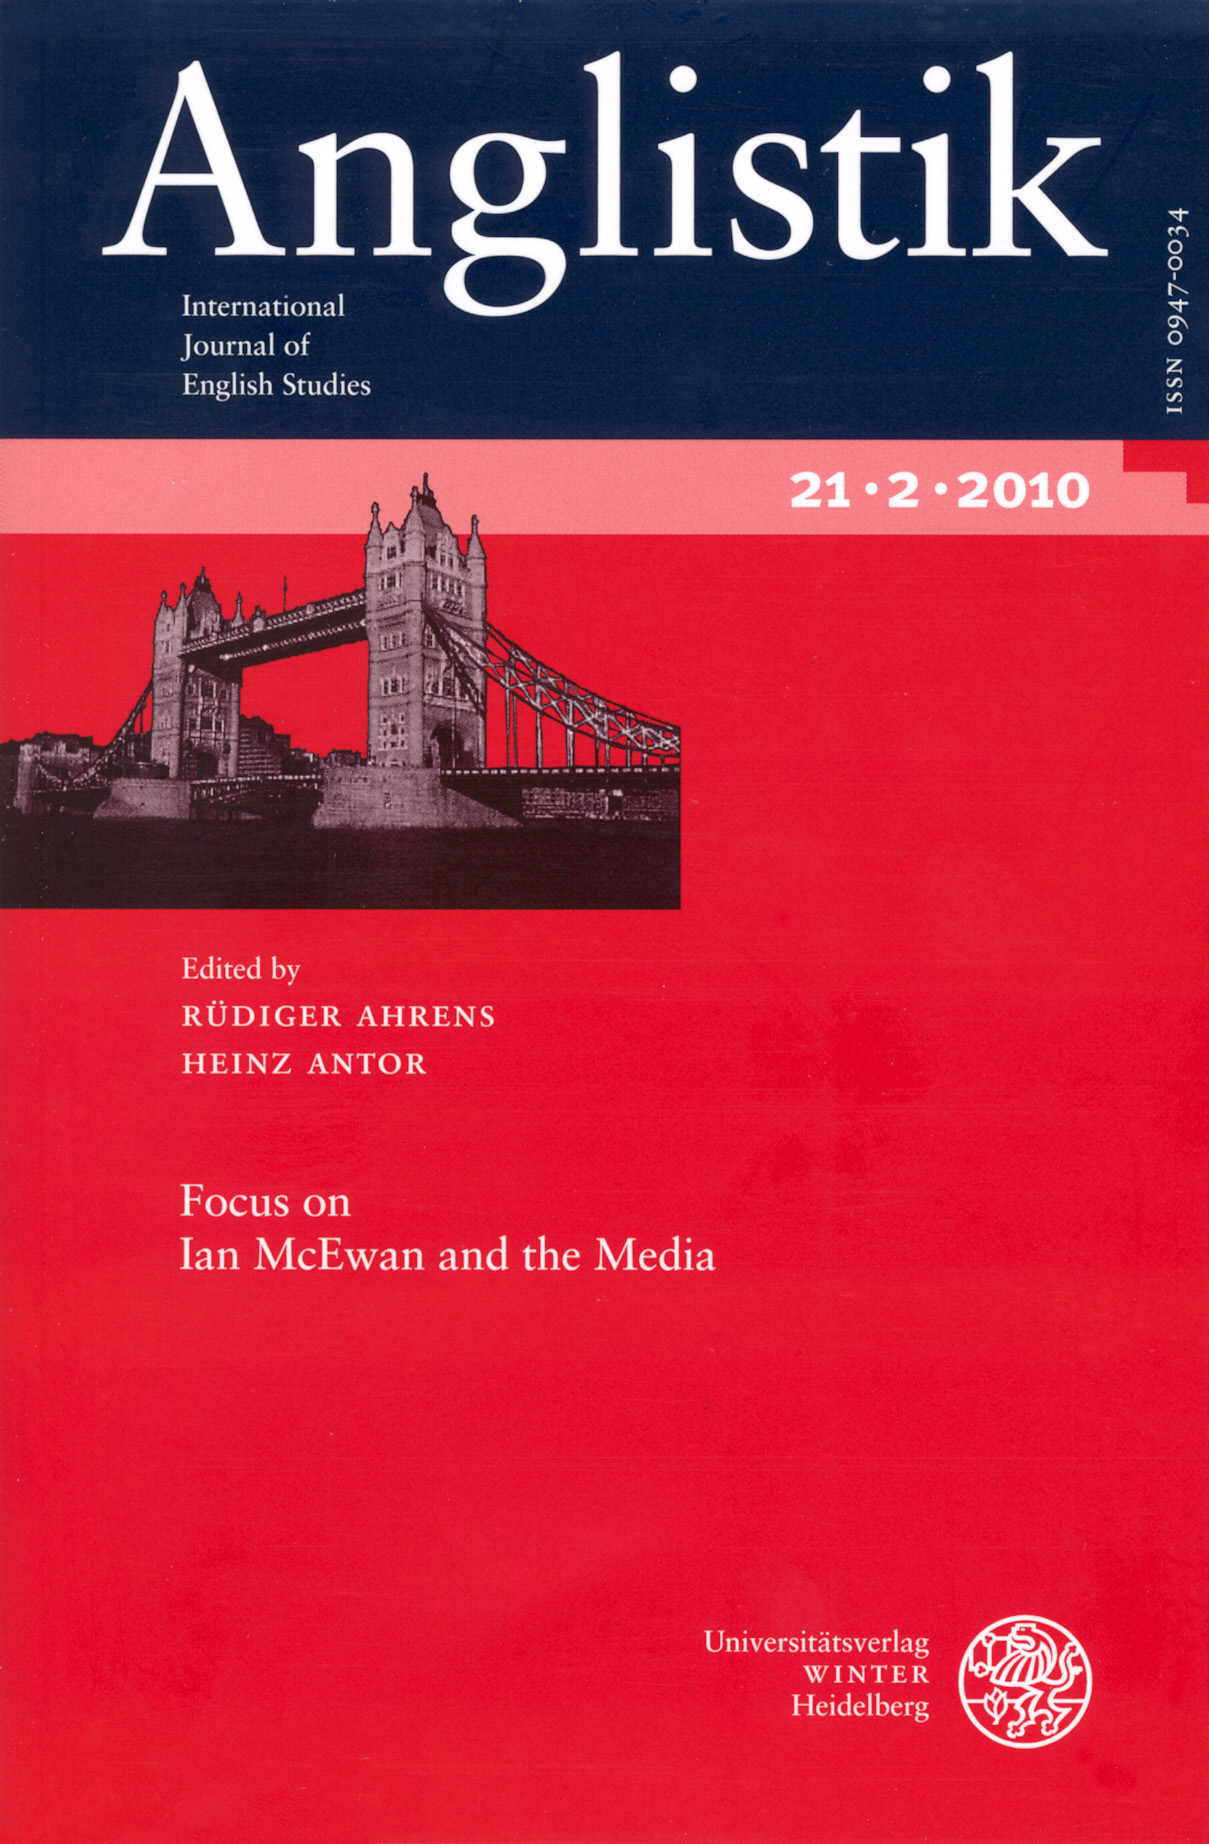 Anglistik
with a focus on Ian McEwan and the Media